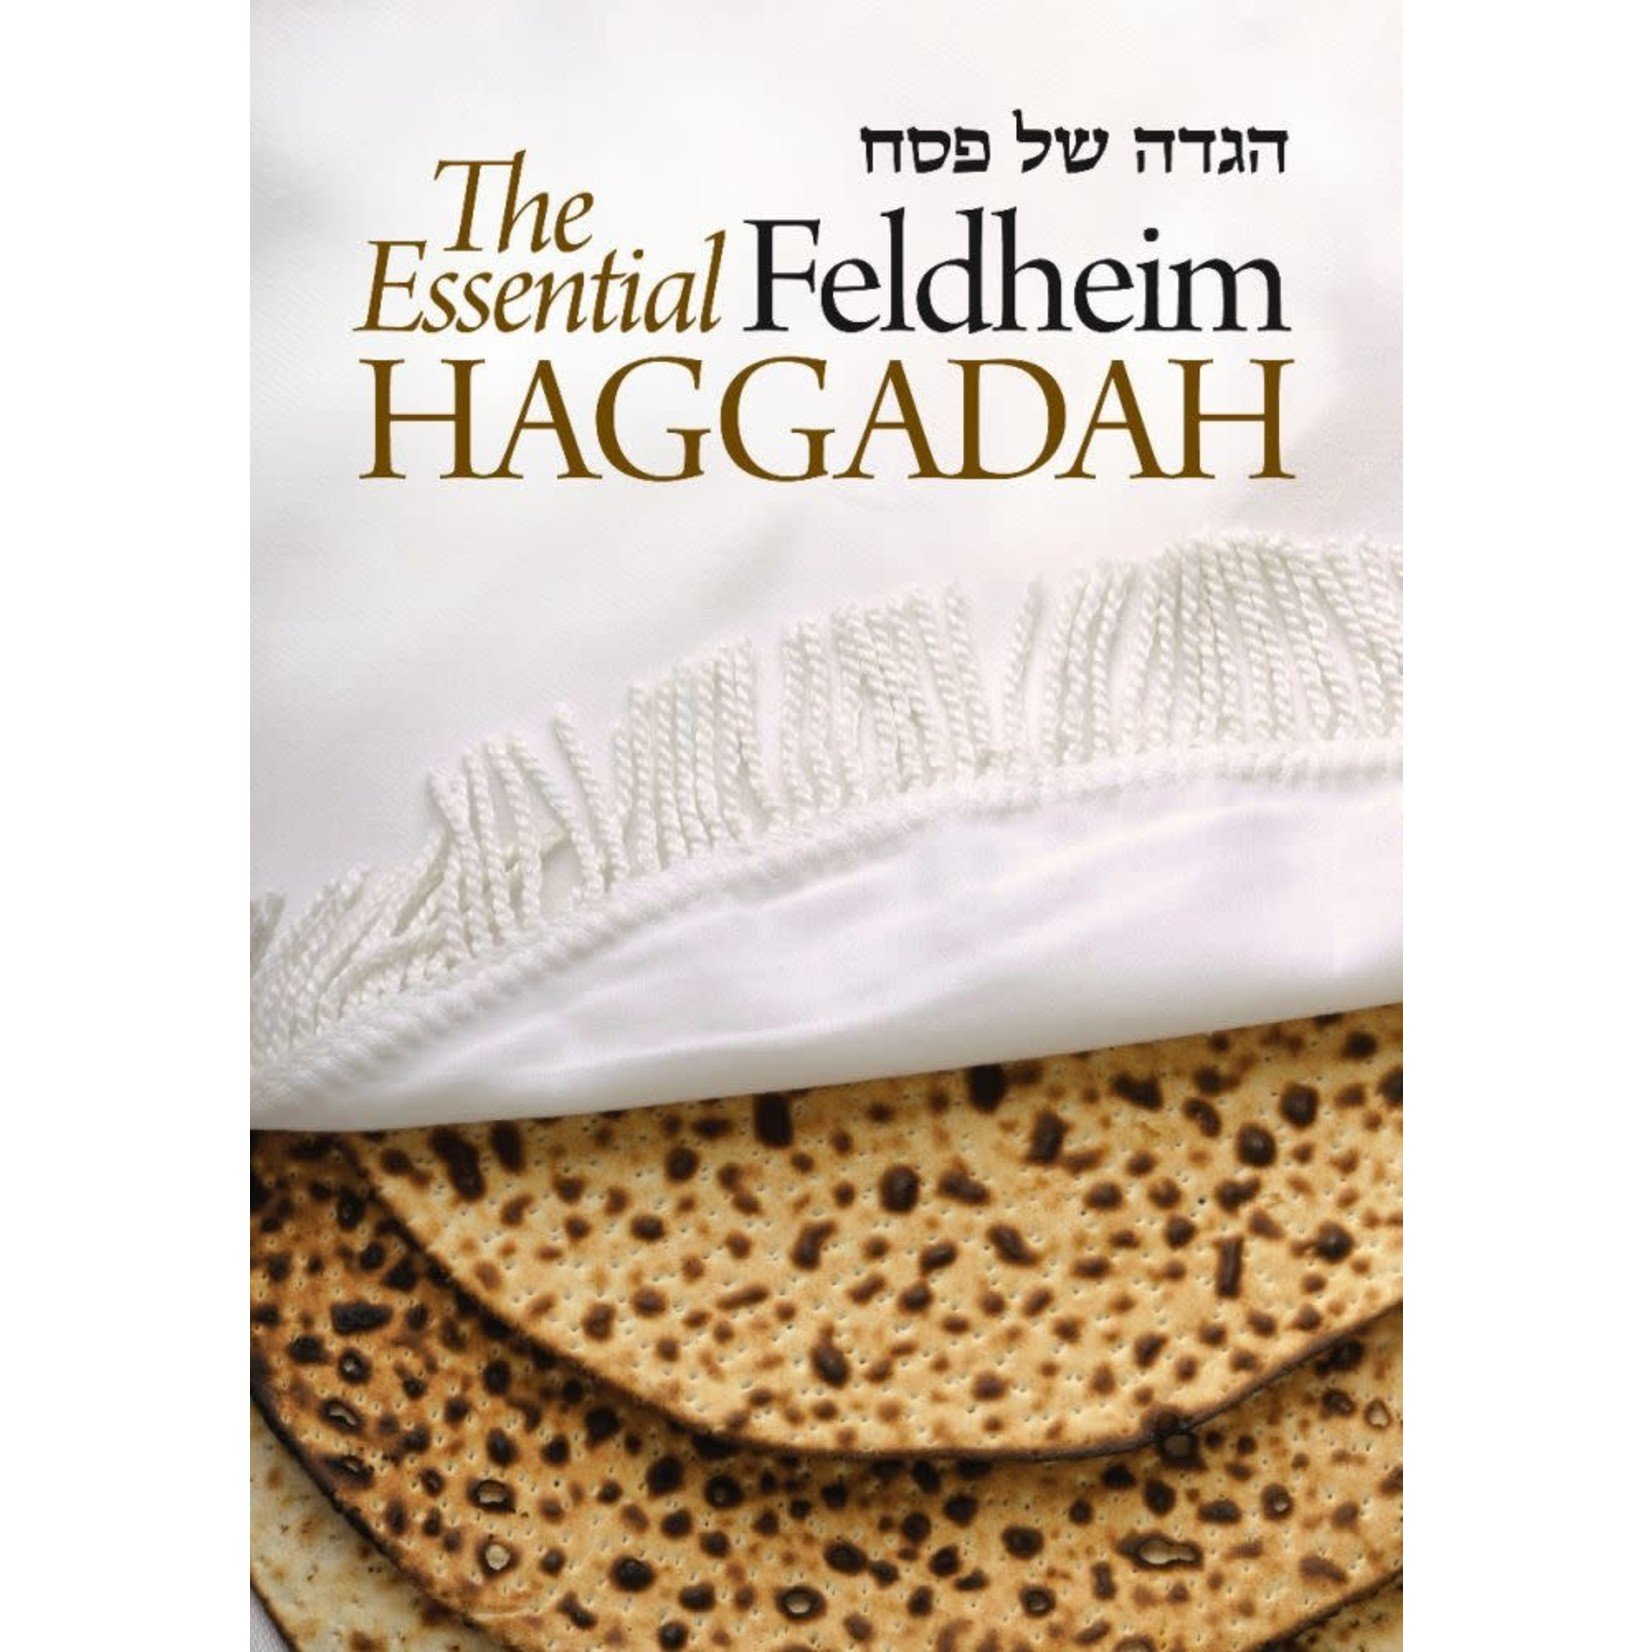 The Essential Feldheim Haggadah